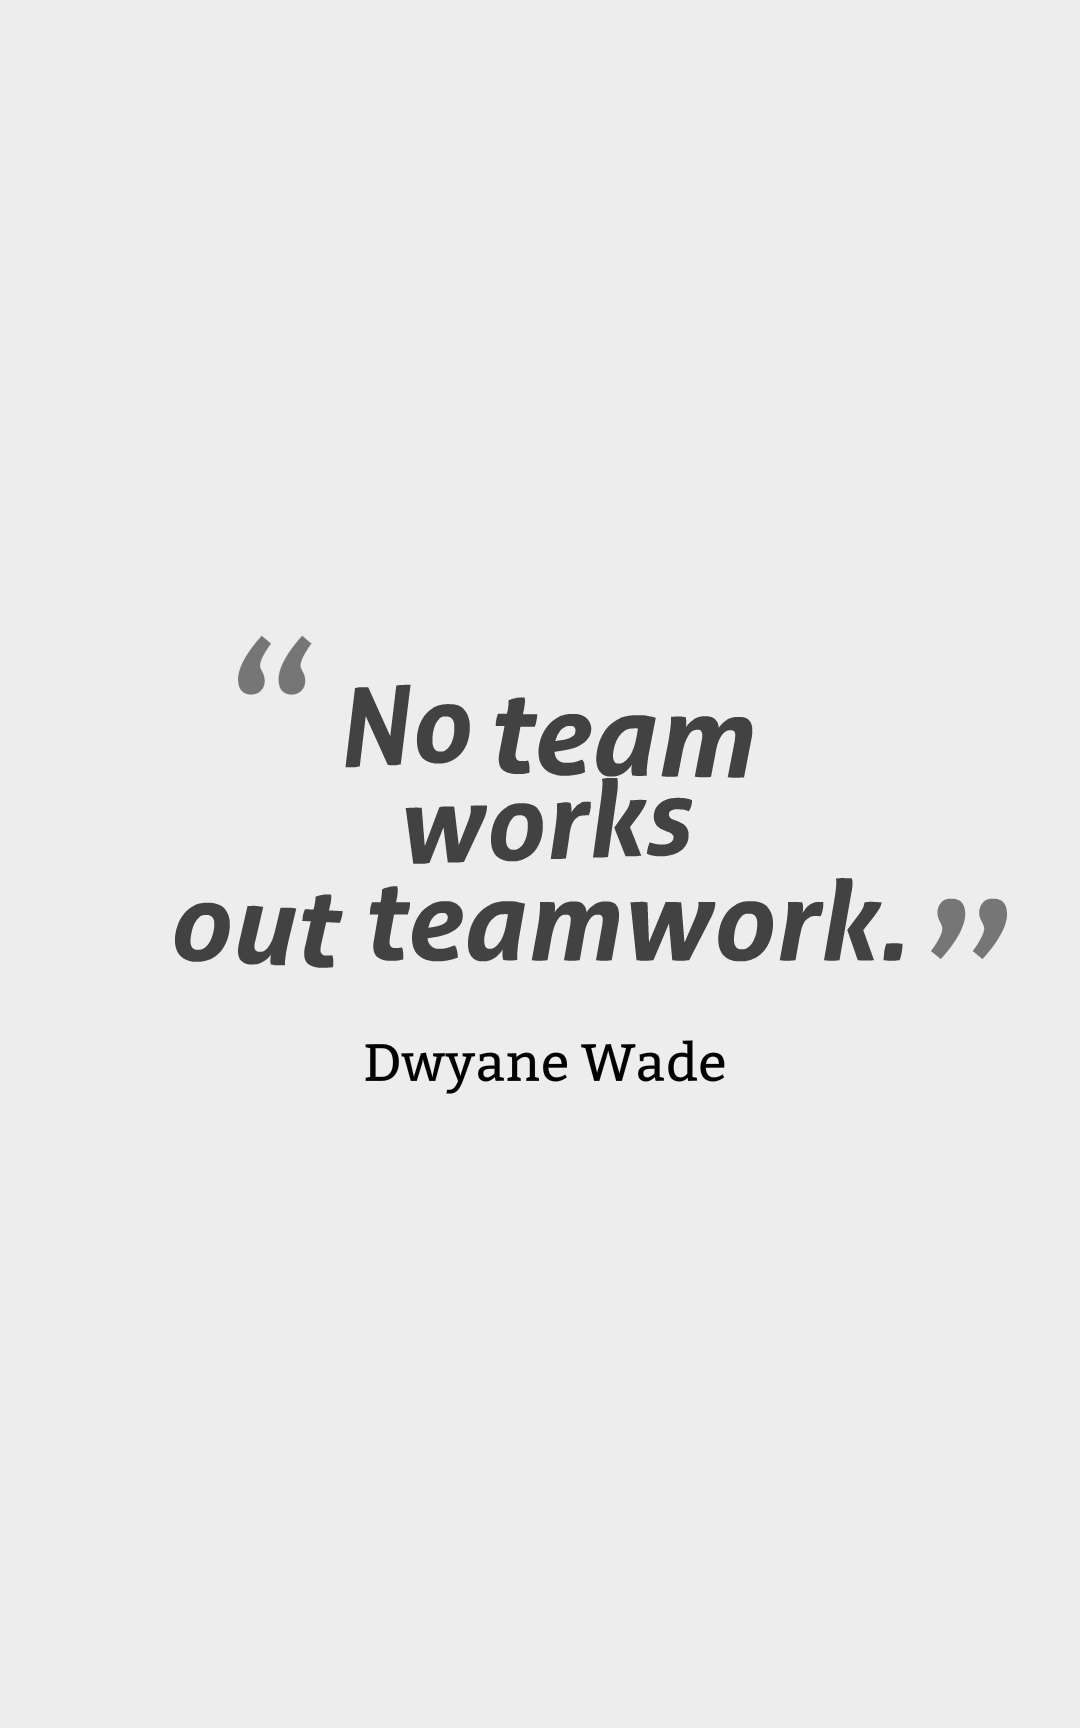 No team works out teamwork.